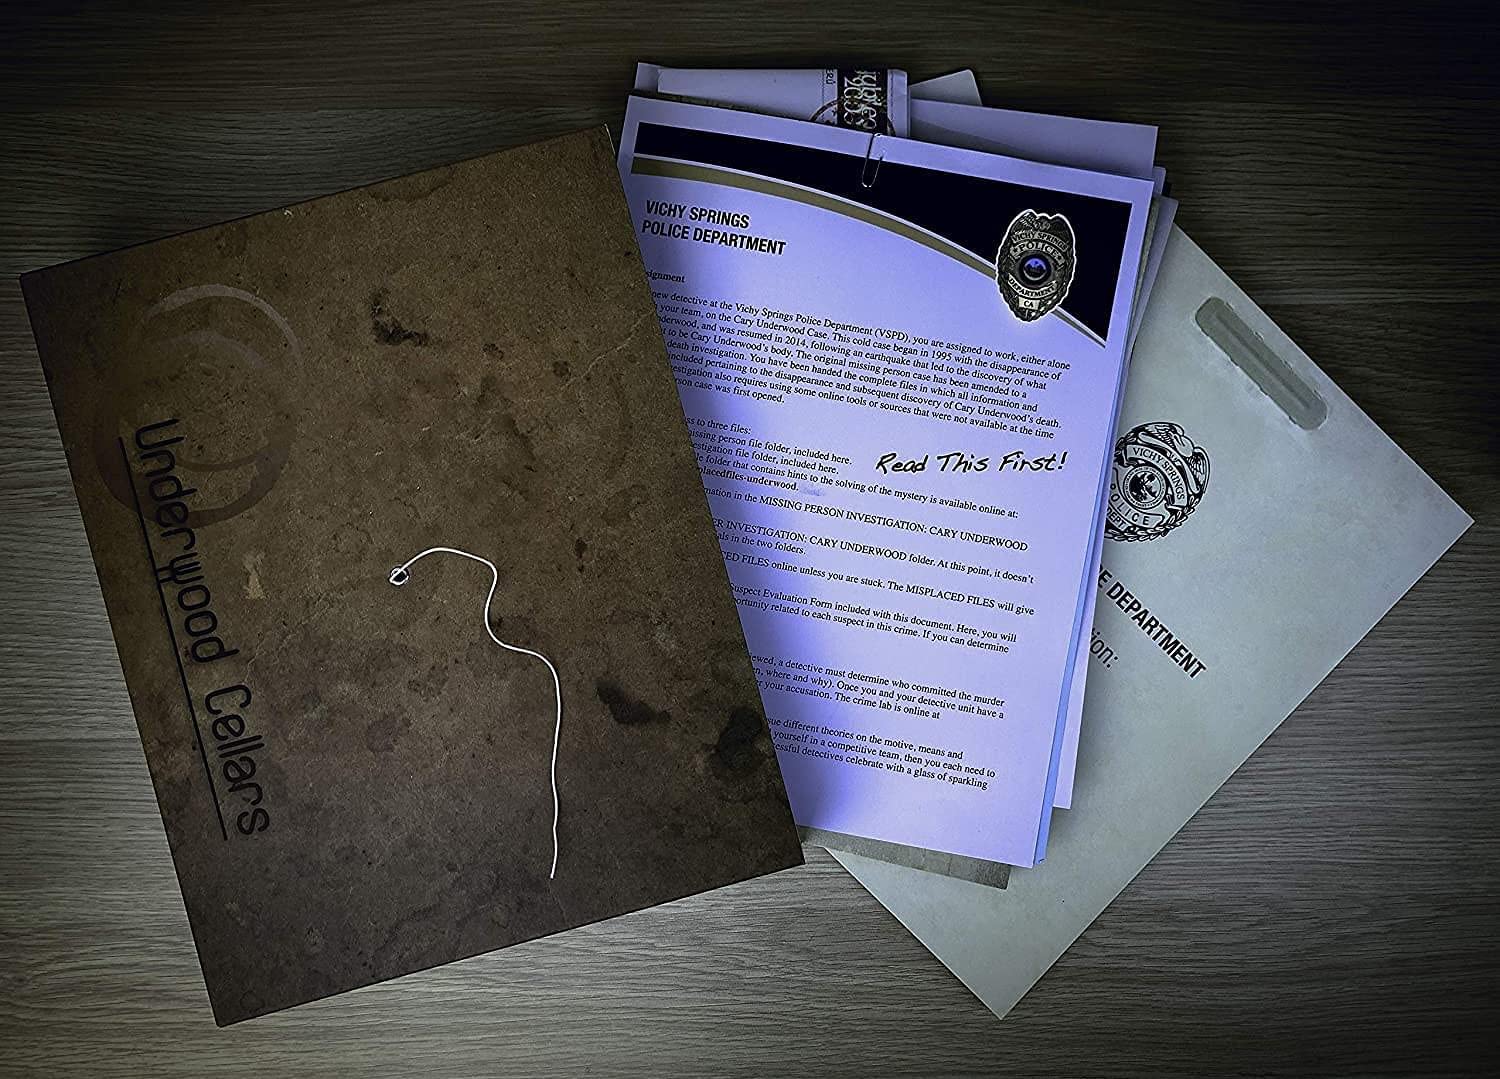 Rental - Underwood Cellars - Murder Mystery Party Case Files - Crime Investigation